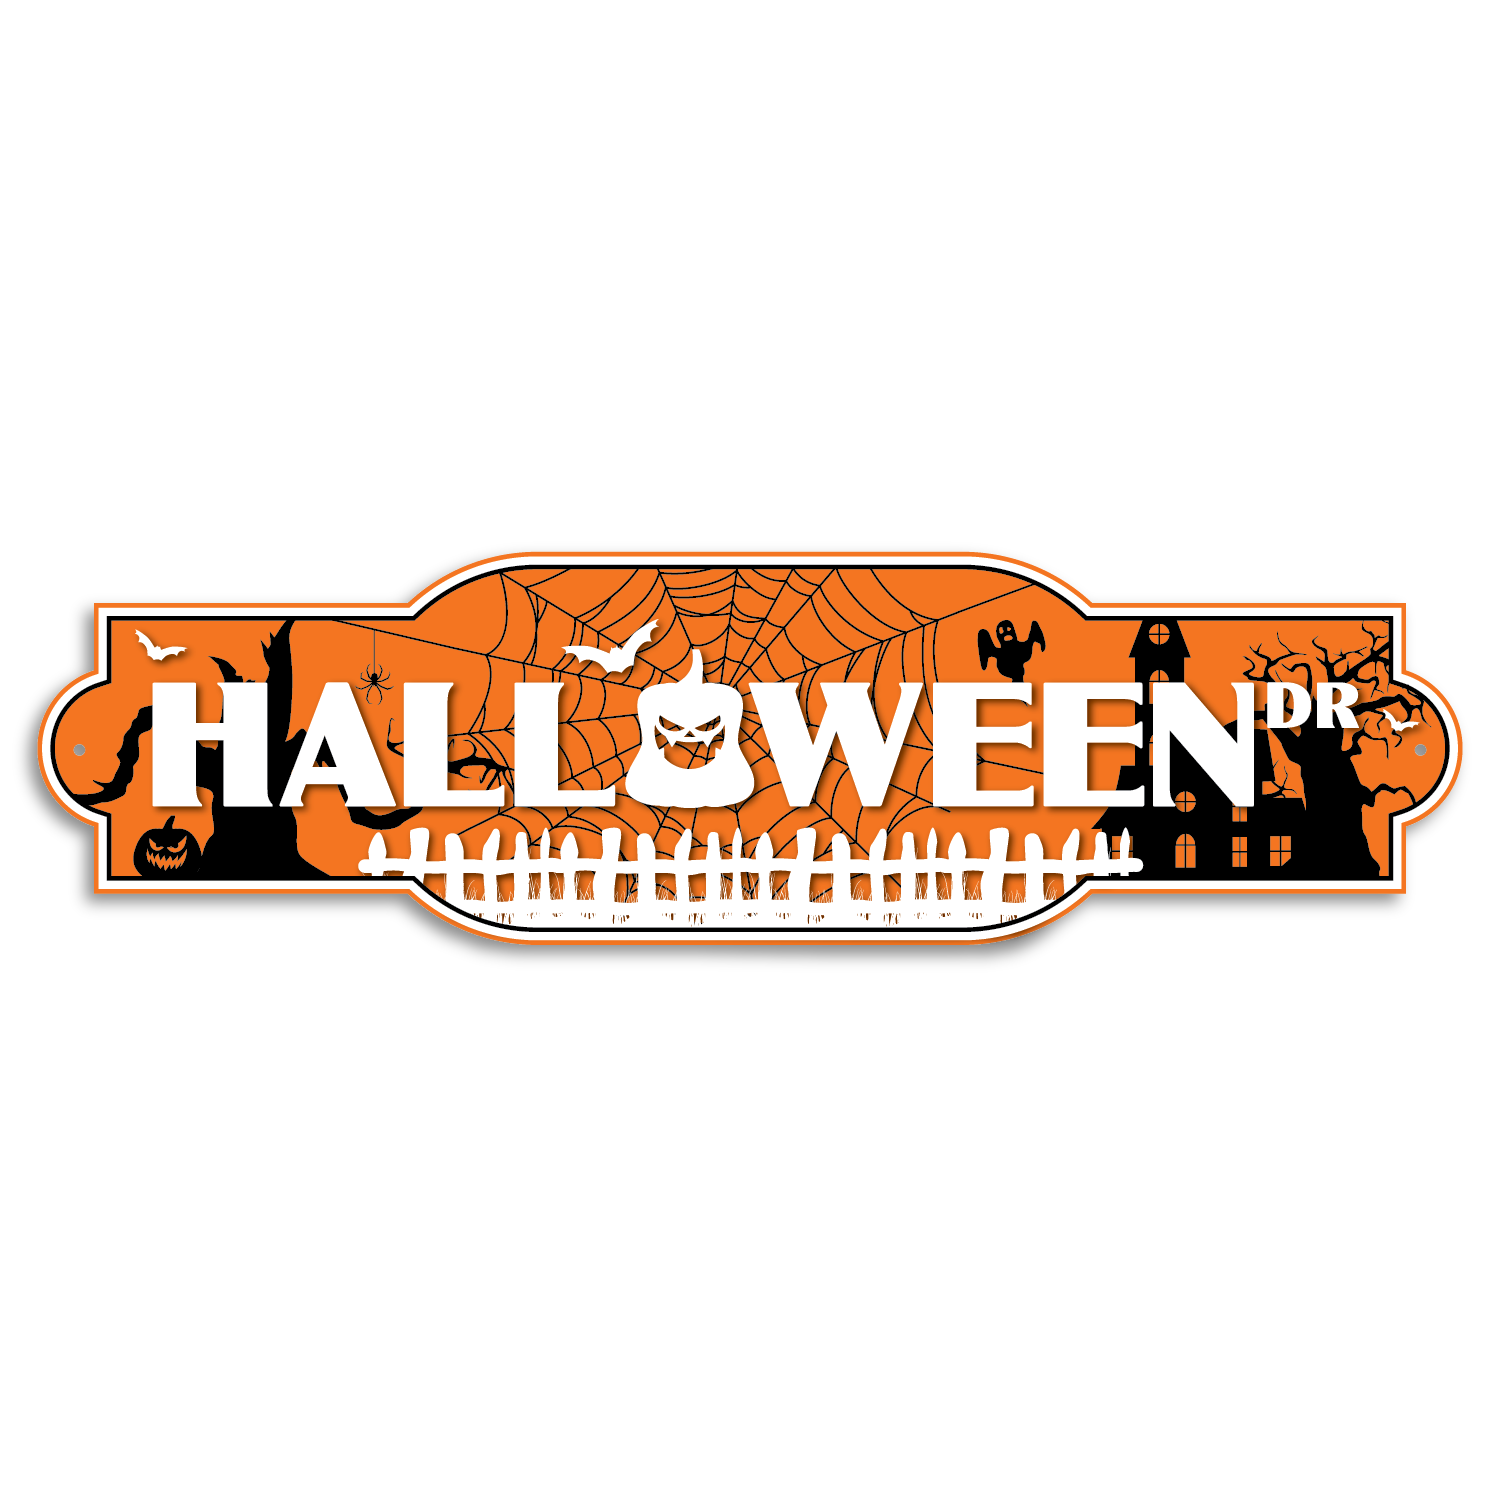 Halloween Street Sign - Halloween DR